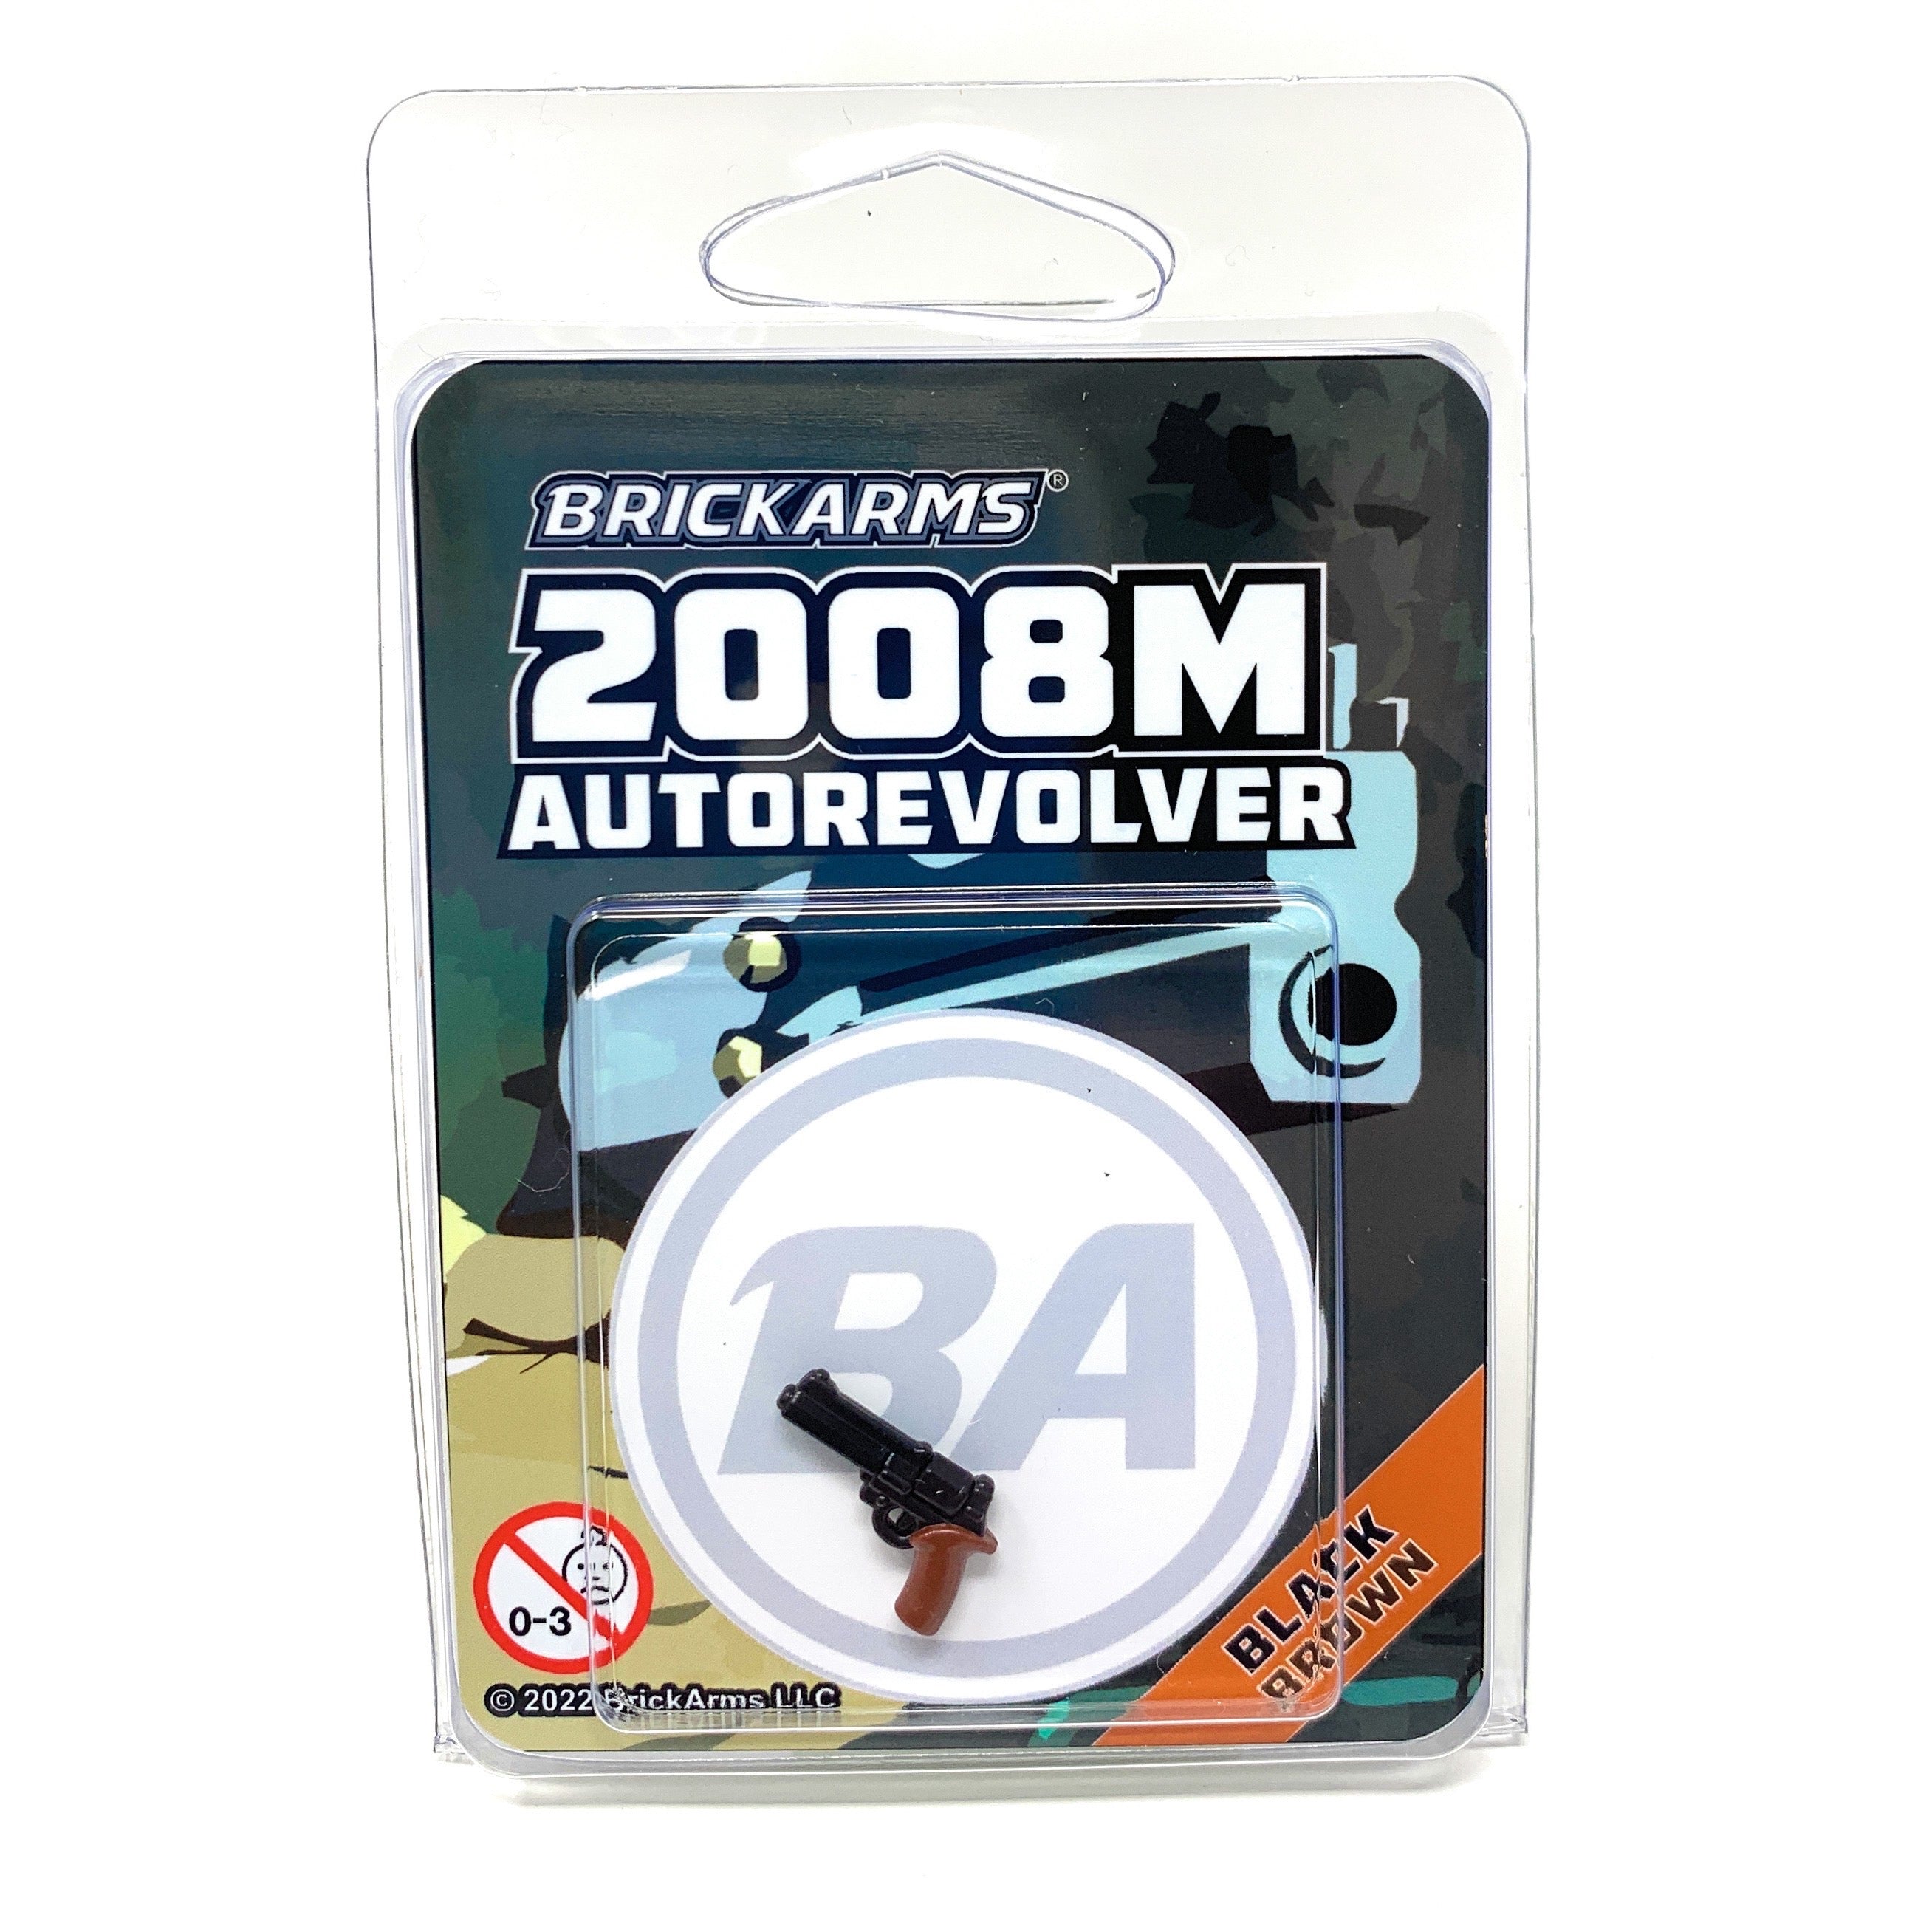 2008M Revolver Reloaded - BrickArms®